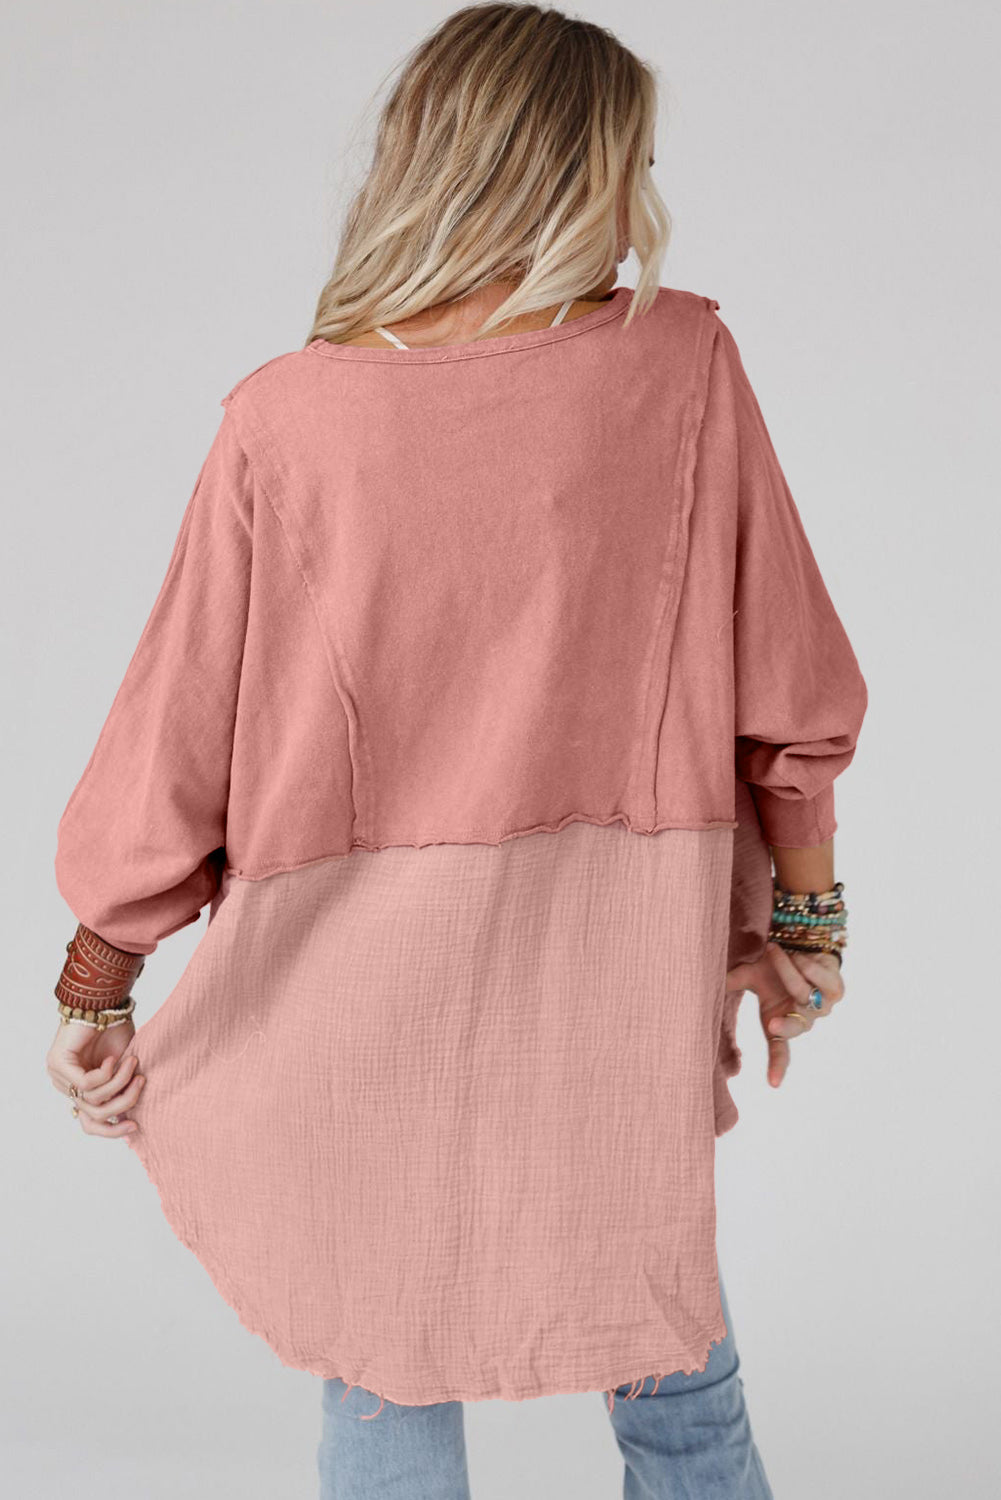 Rosafarbene Crinkle-Spleiß-Bluse mit rohem Saum und hohem, tiefem, übergroßem Oberteil